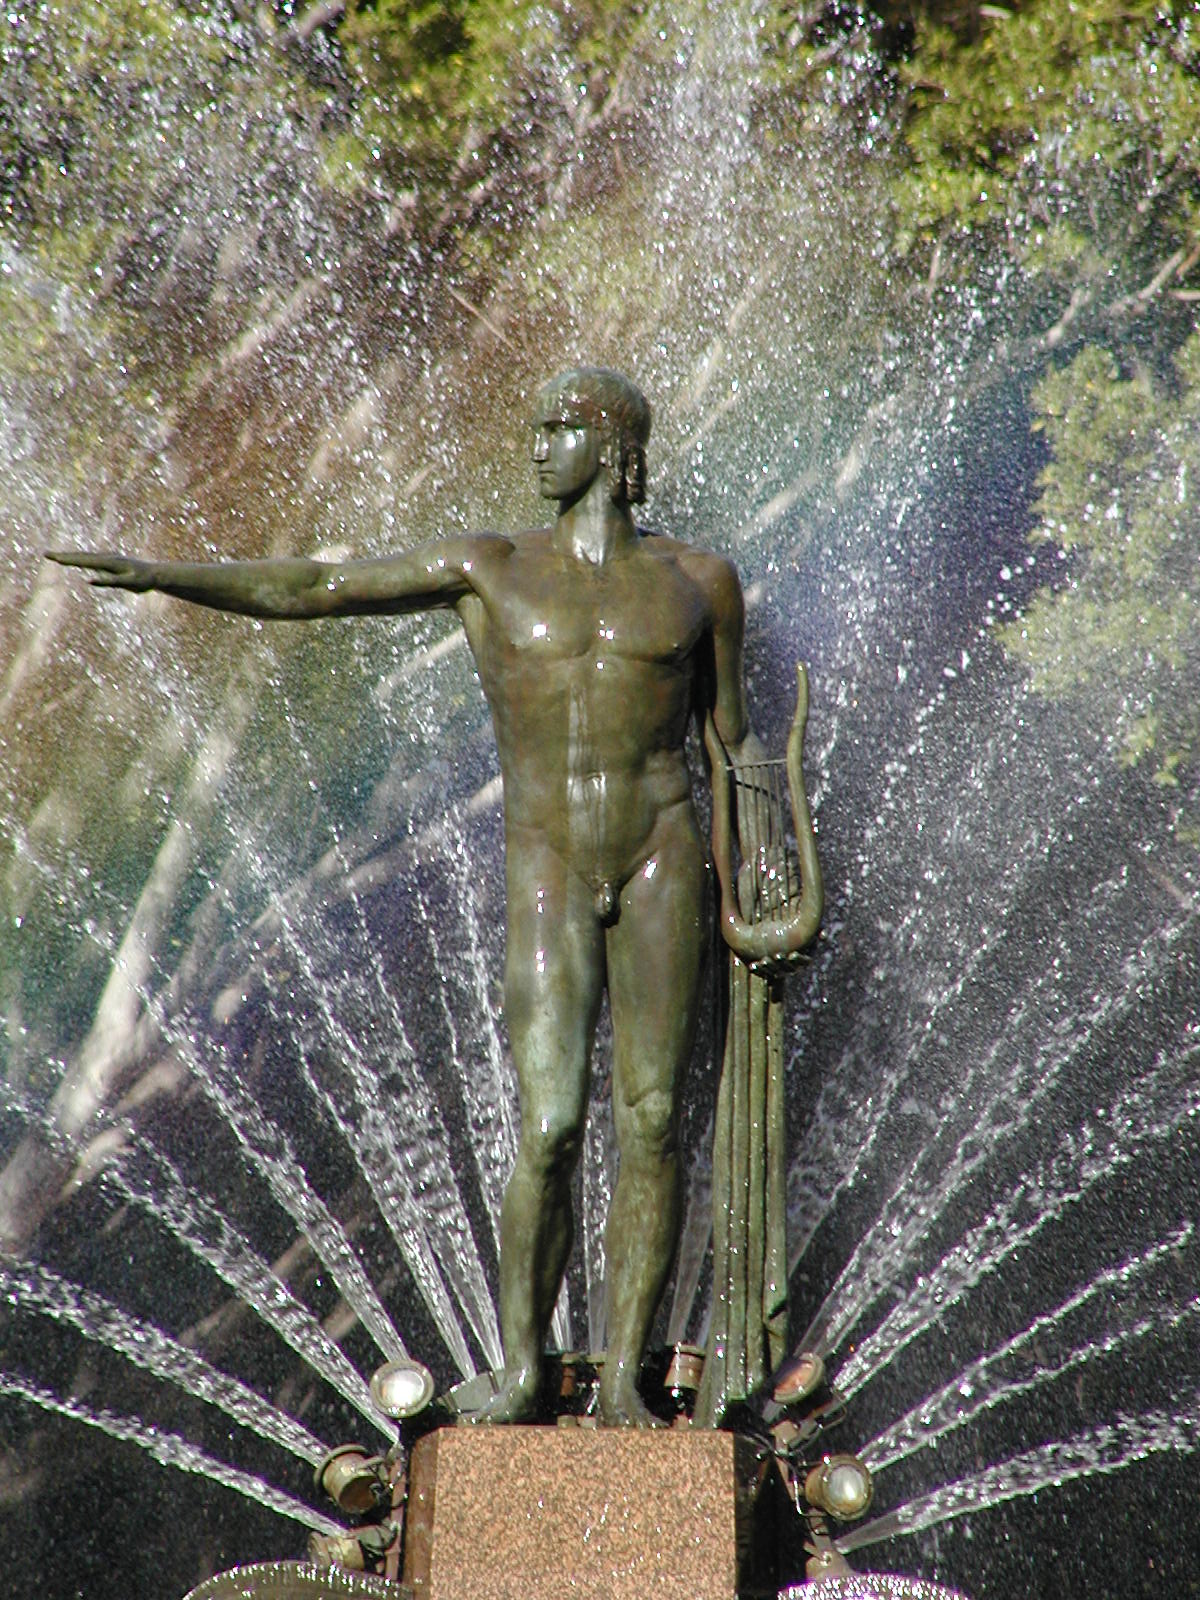 20-Jun-2001 09:56 - Sydney - Archibald Memorial Fountain